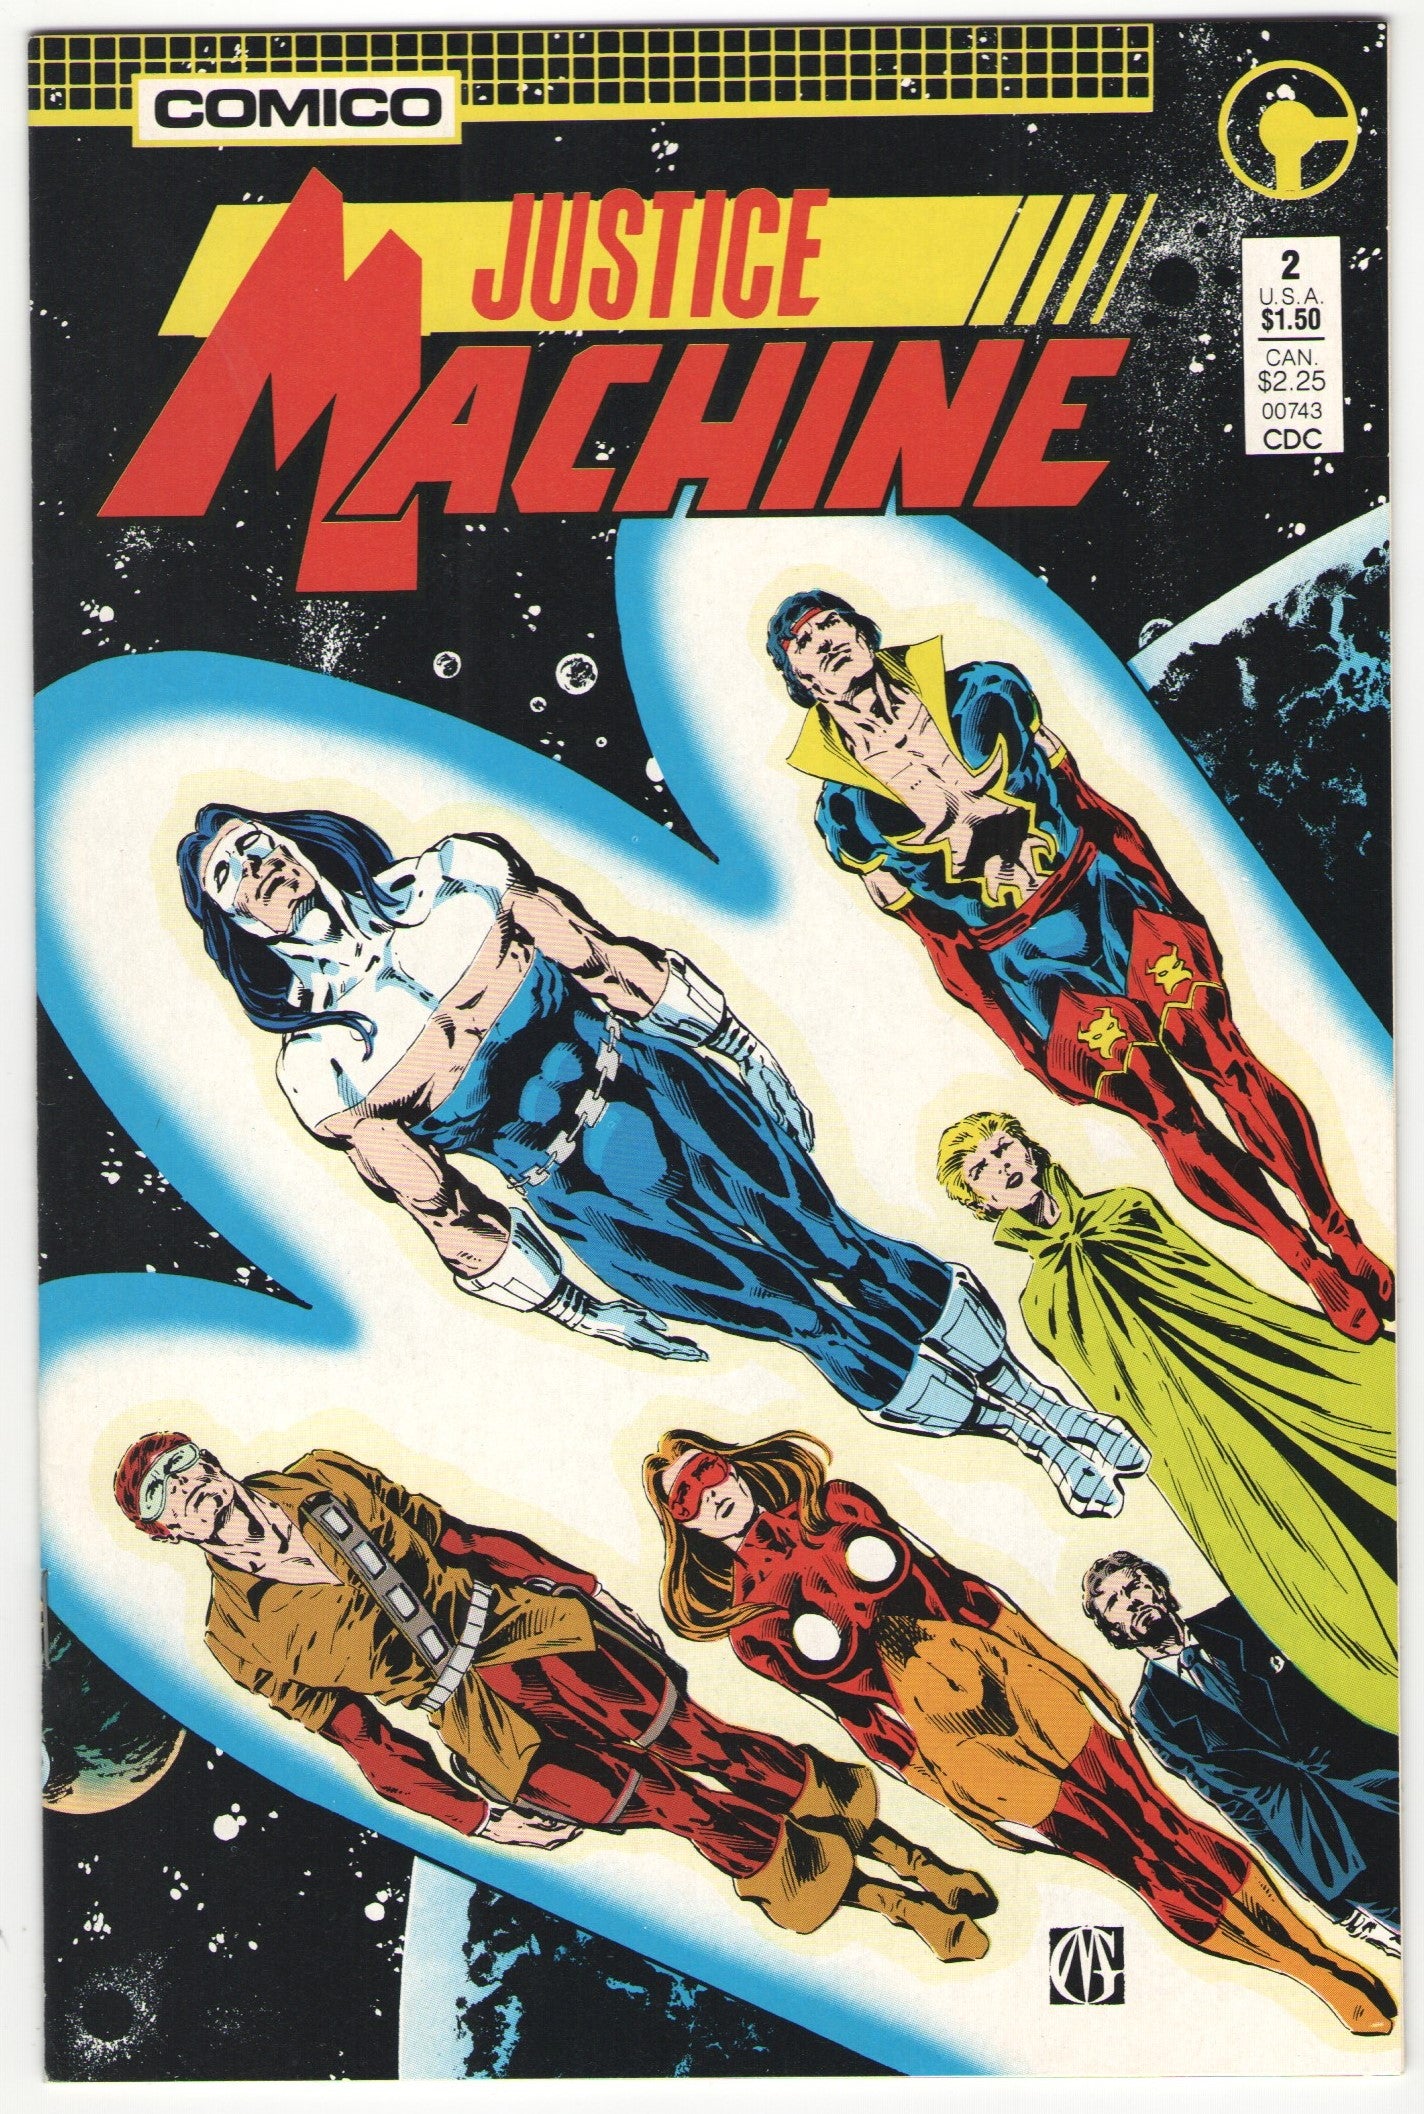 Justice Machine #2 (1987)